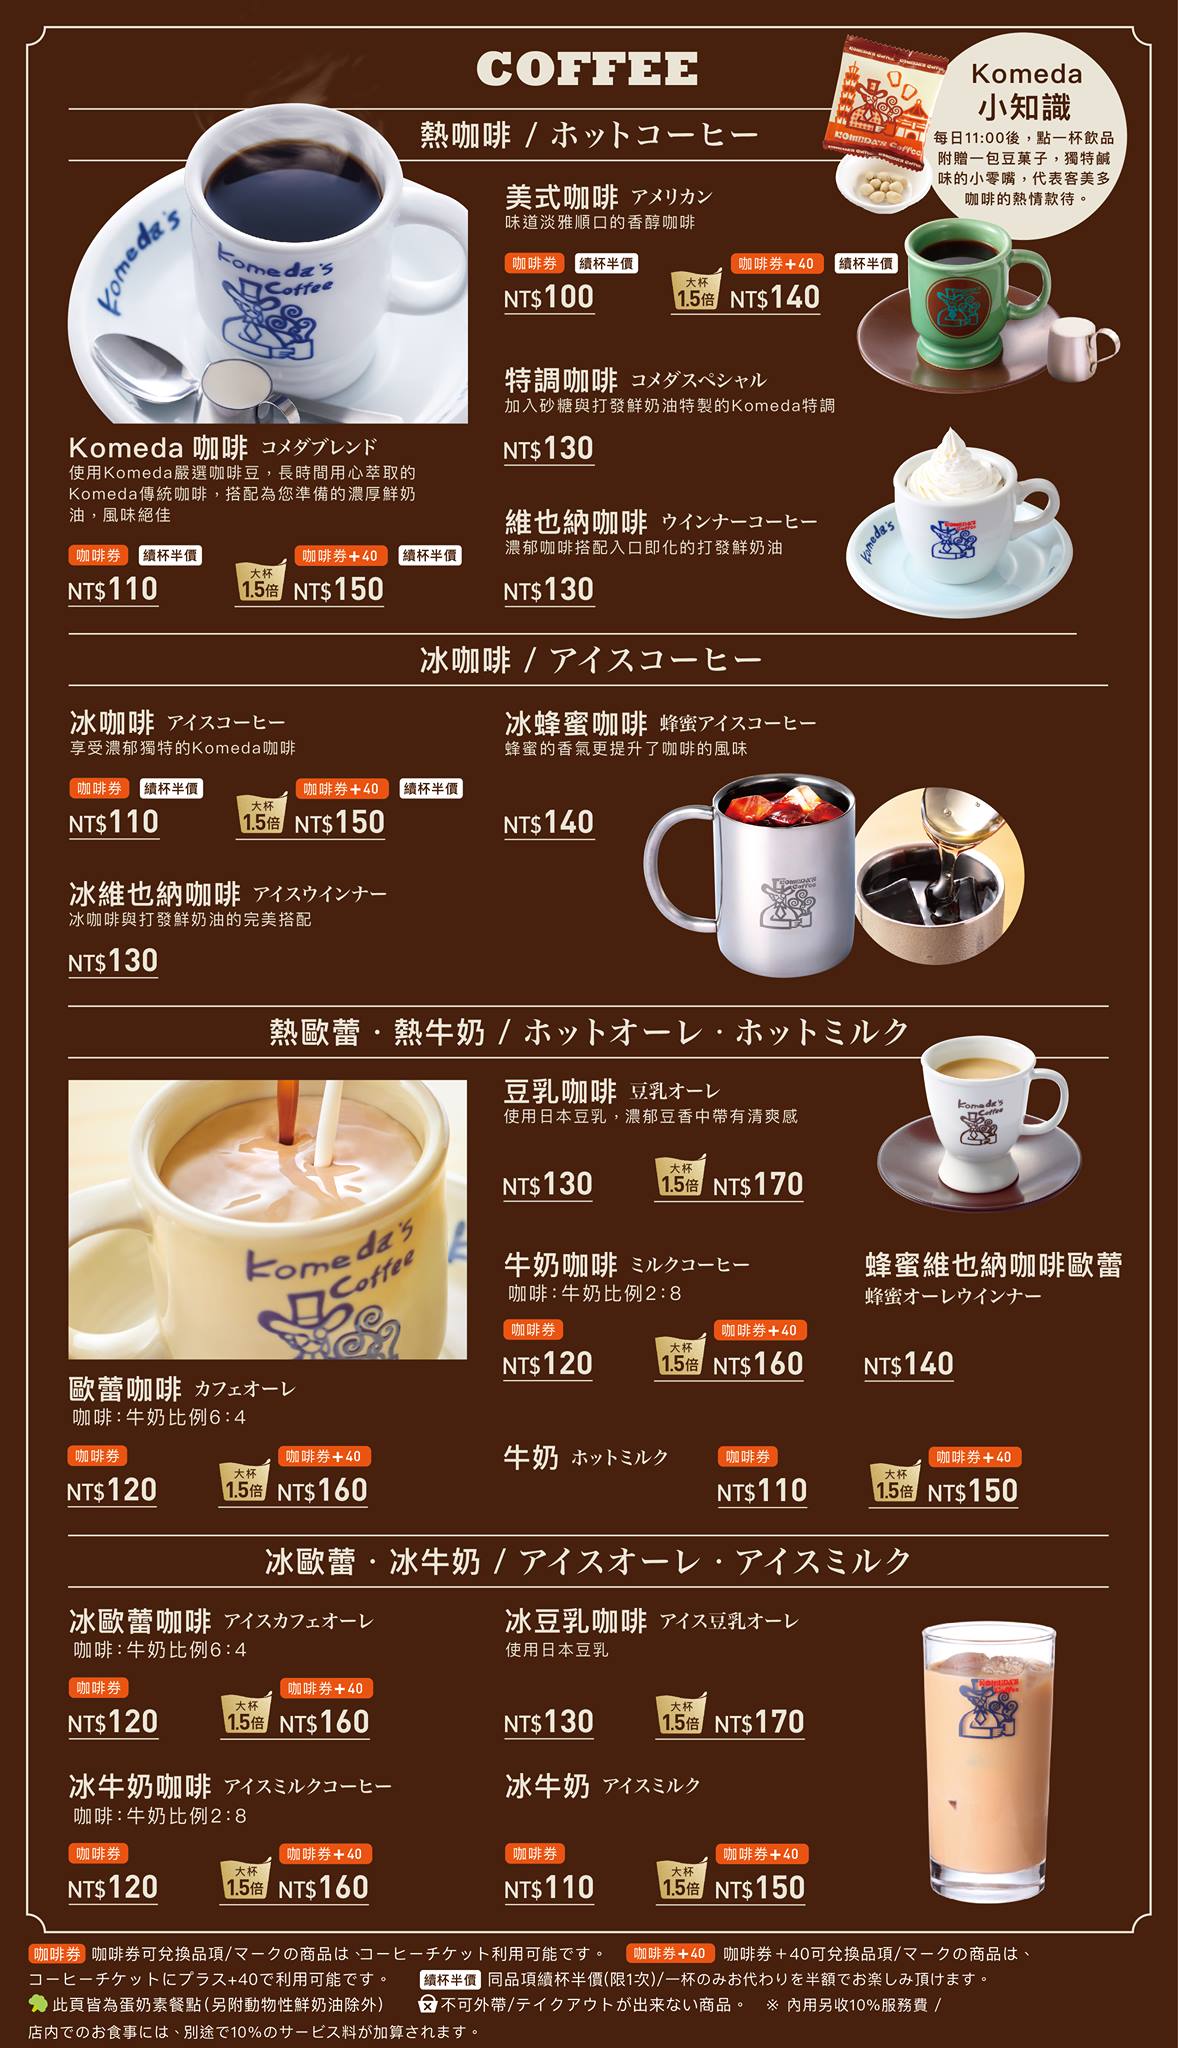 Komeda's Coffee 客美多咖啡菜單MENU